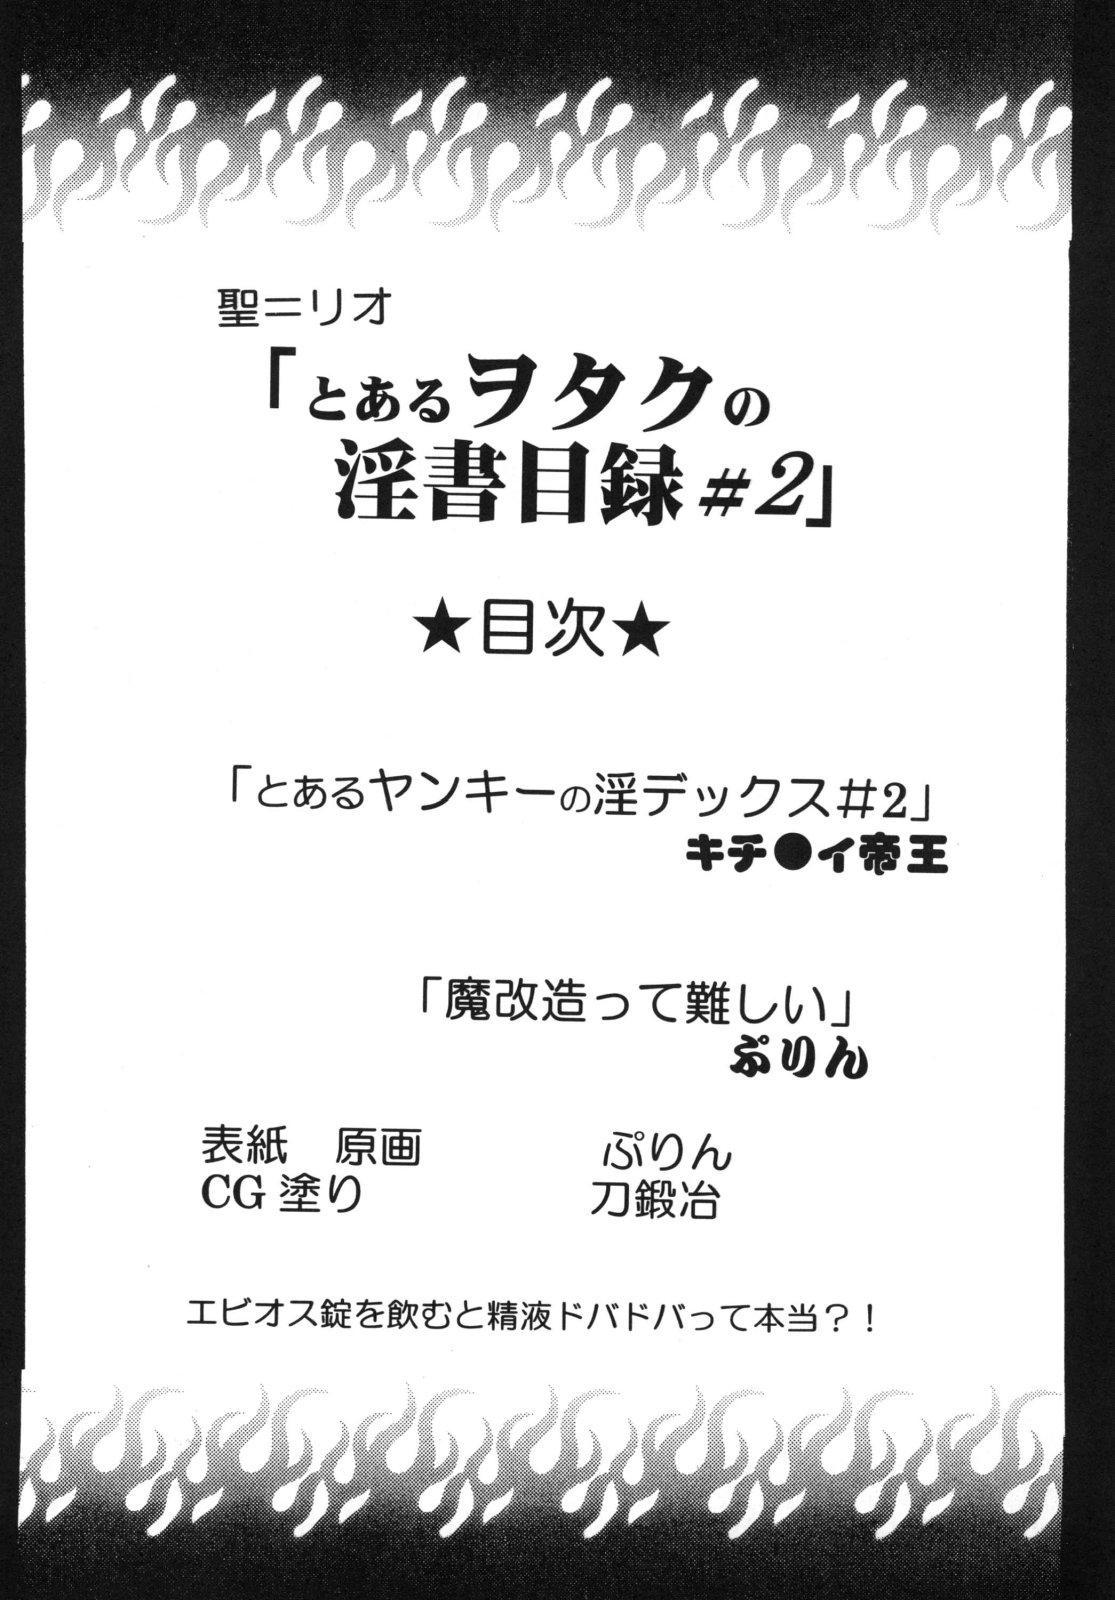 Sex Party Toaru Otaku no Index #2 | 某魔术的淫蒂克丝，某不良少年的茵蒂克丝#2 - Toaru majutsu no index | a certain magical index Gayhardcore - Page 3